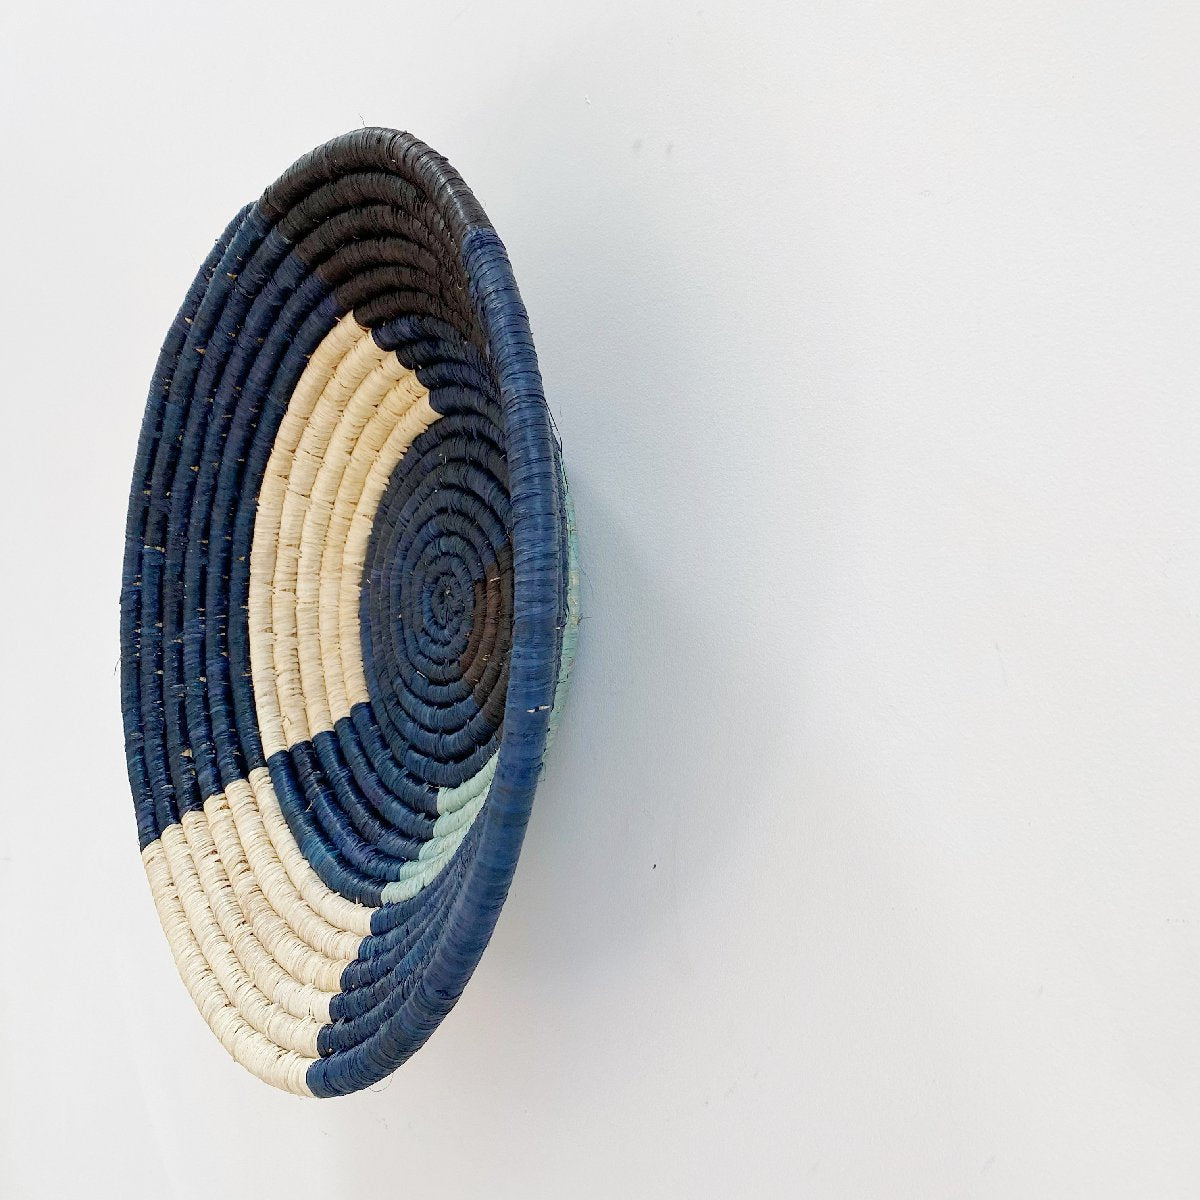 mondocherry - "Msanii" African woven bowl | XL | cool blues #1 - wall